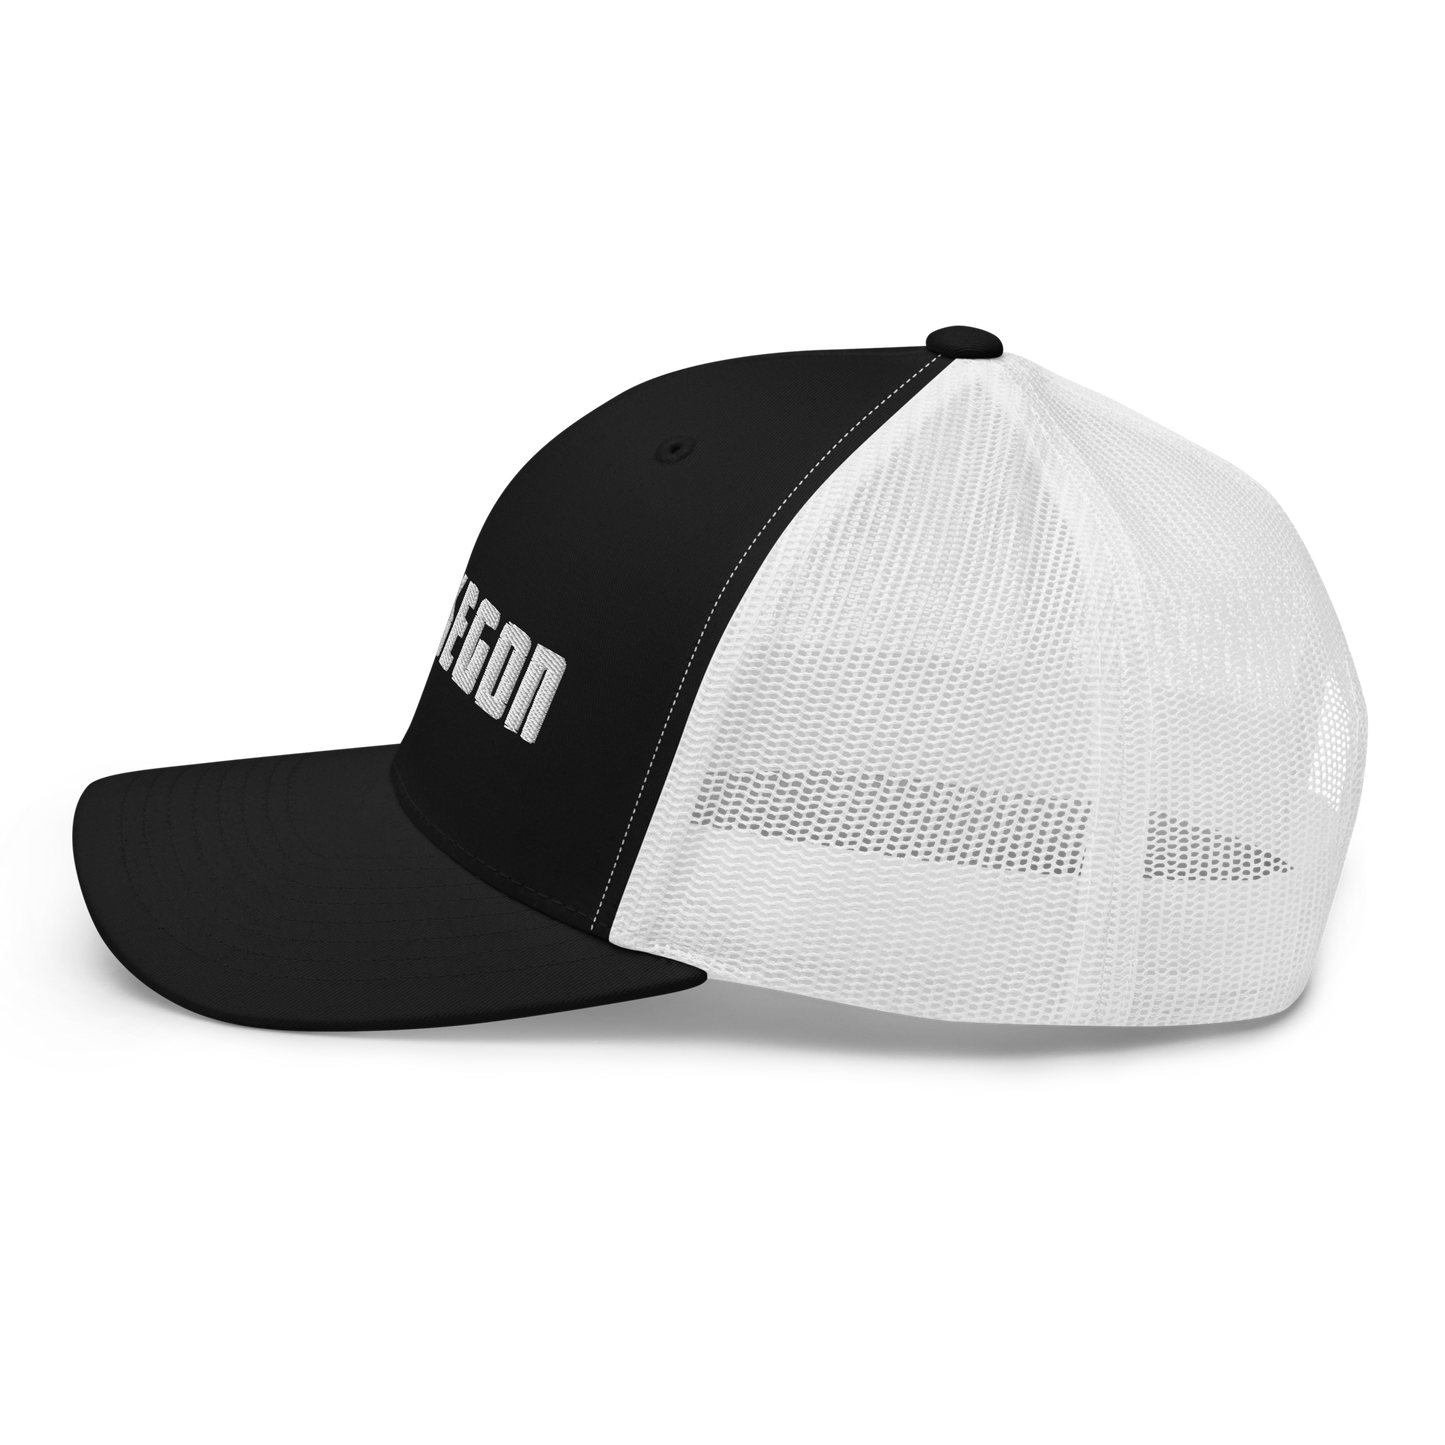 'Muskegon' Trucker Hat | White/Black Embroidery